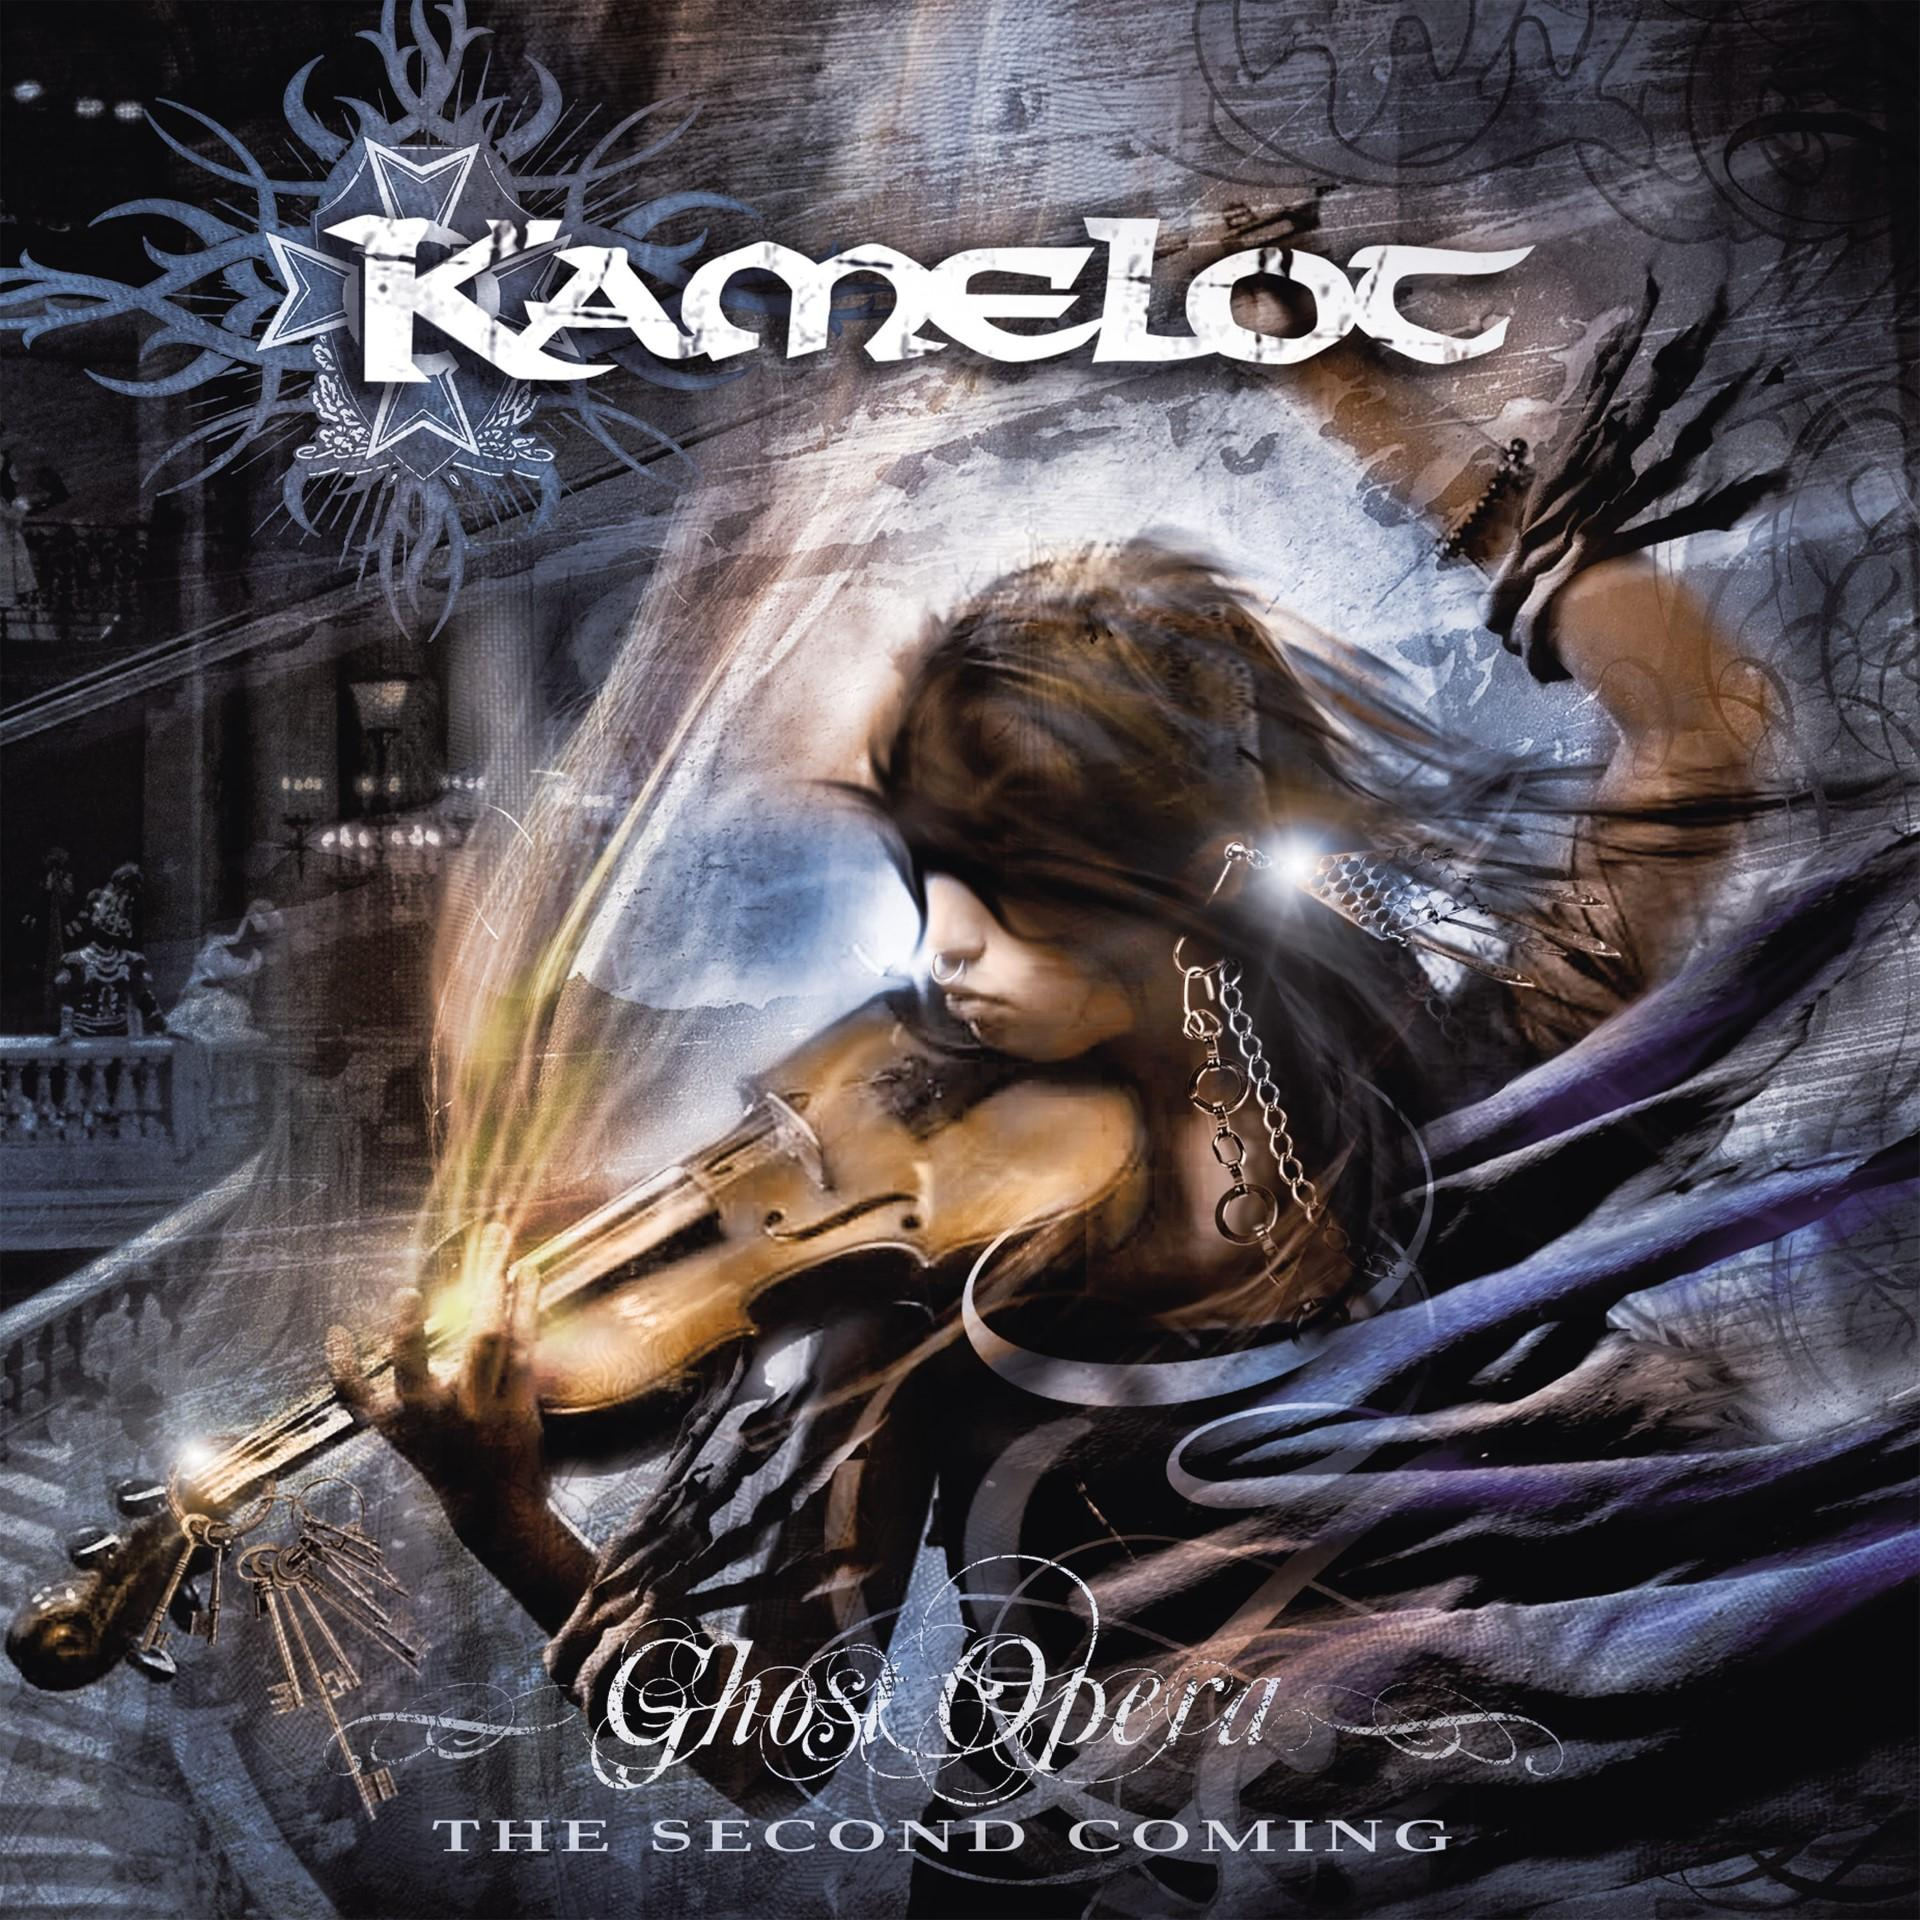 Kamelot - Ghost Opera: Second (Vinyl) - Gatefold) Coming The (LP